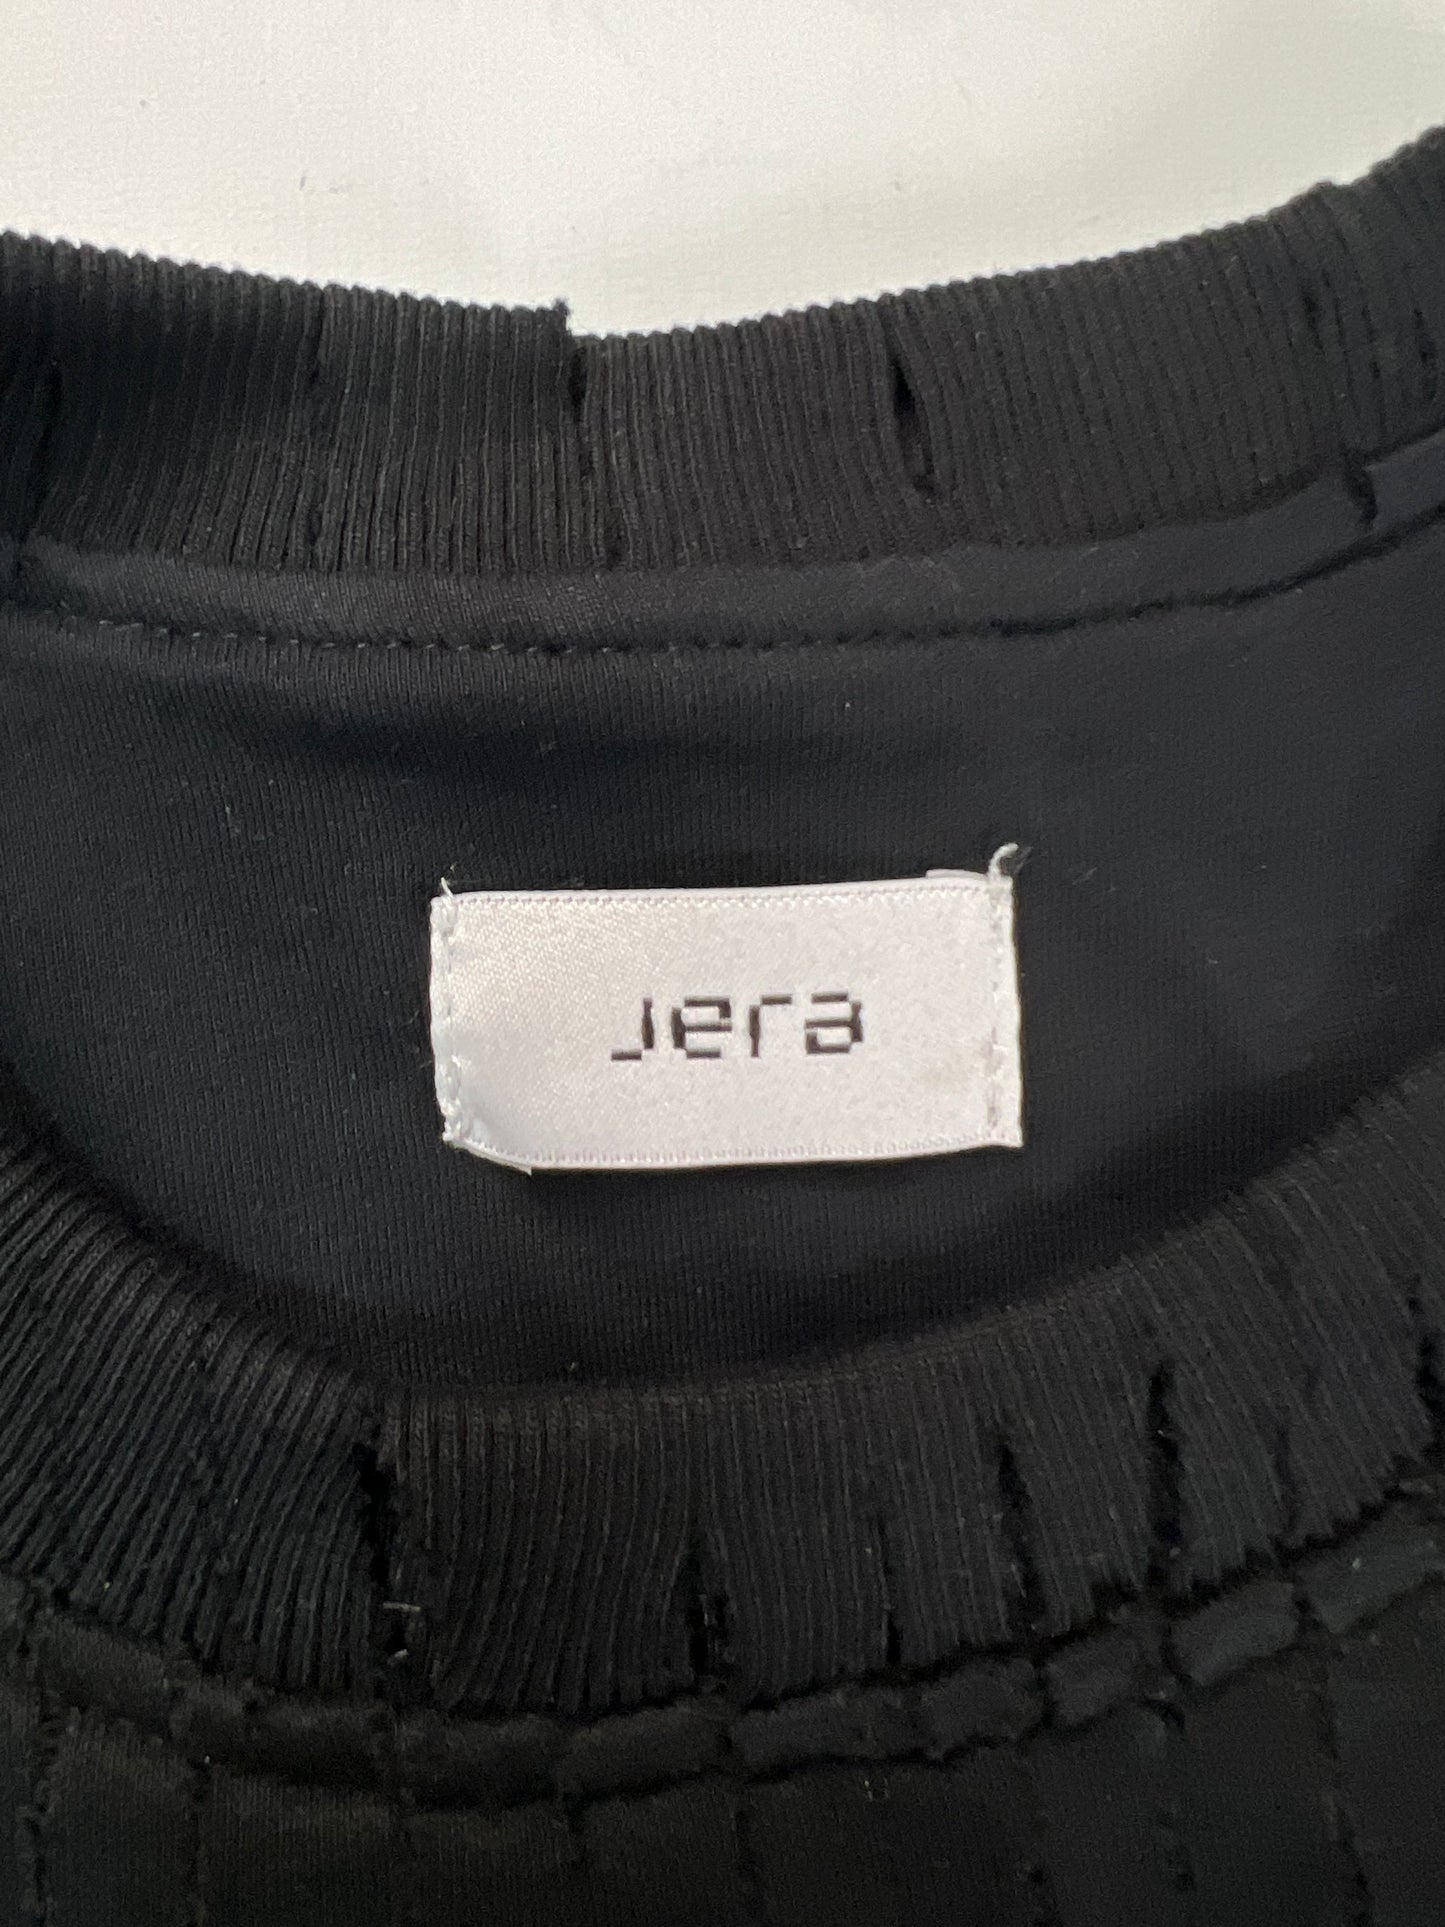 Jera Distressed laser cut Black longsleeve SZ:S|XL